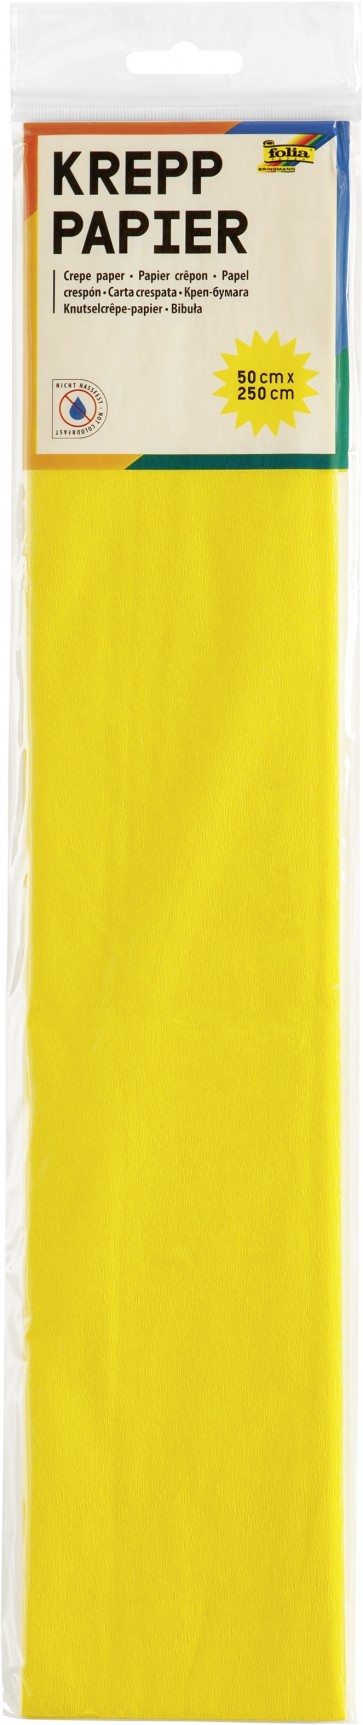 Kreppapīrs 250*50 cm Folia® dzeltens